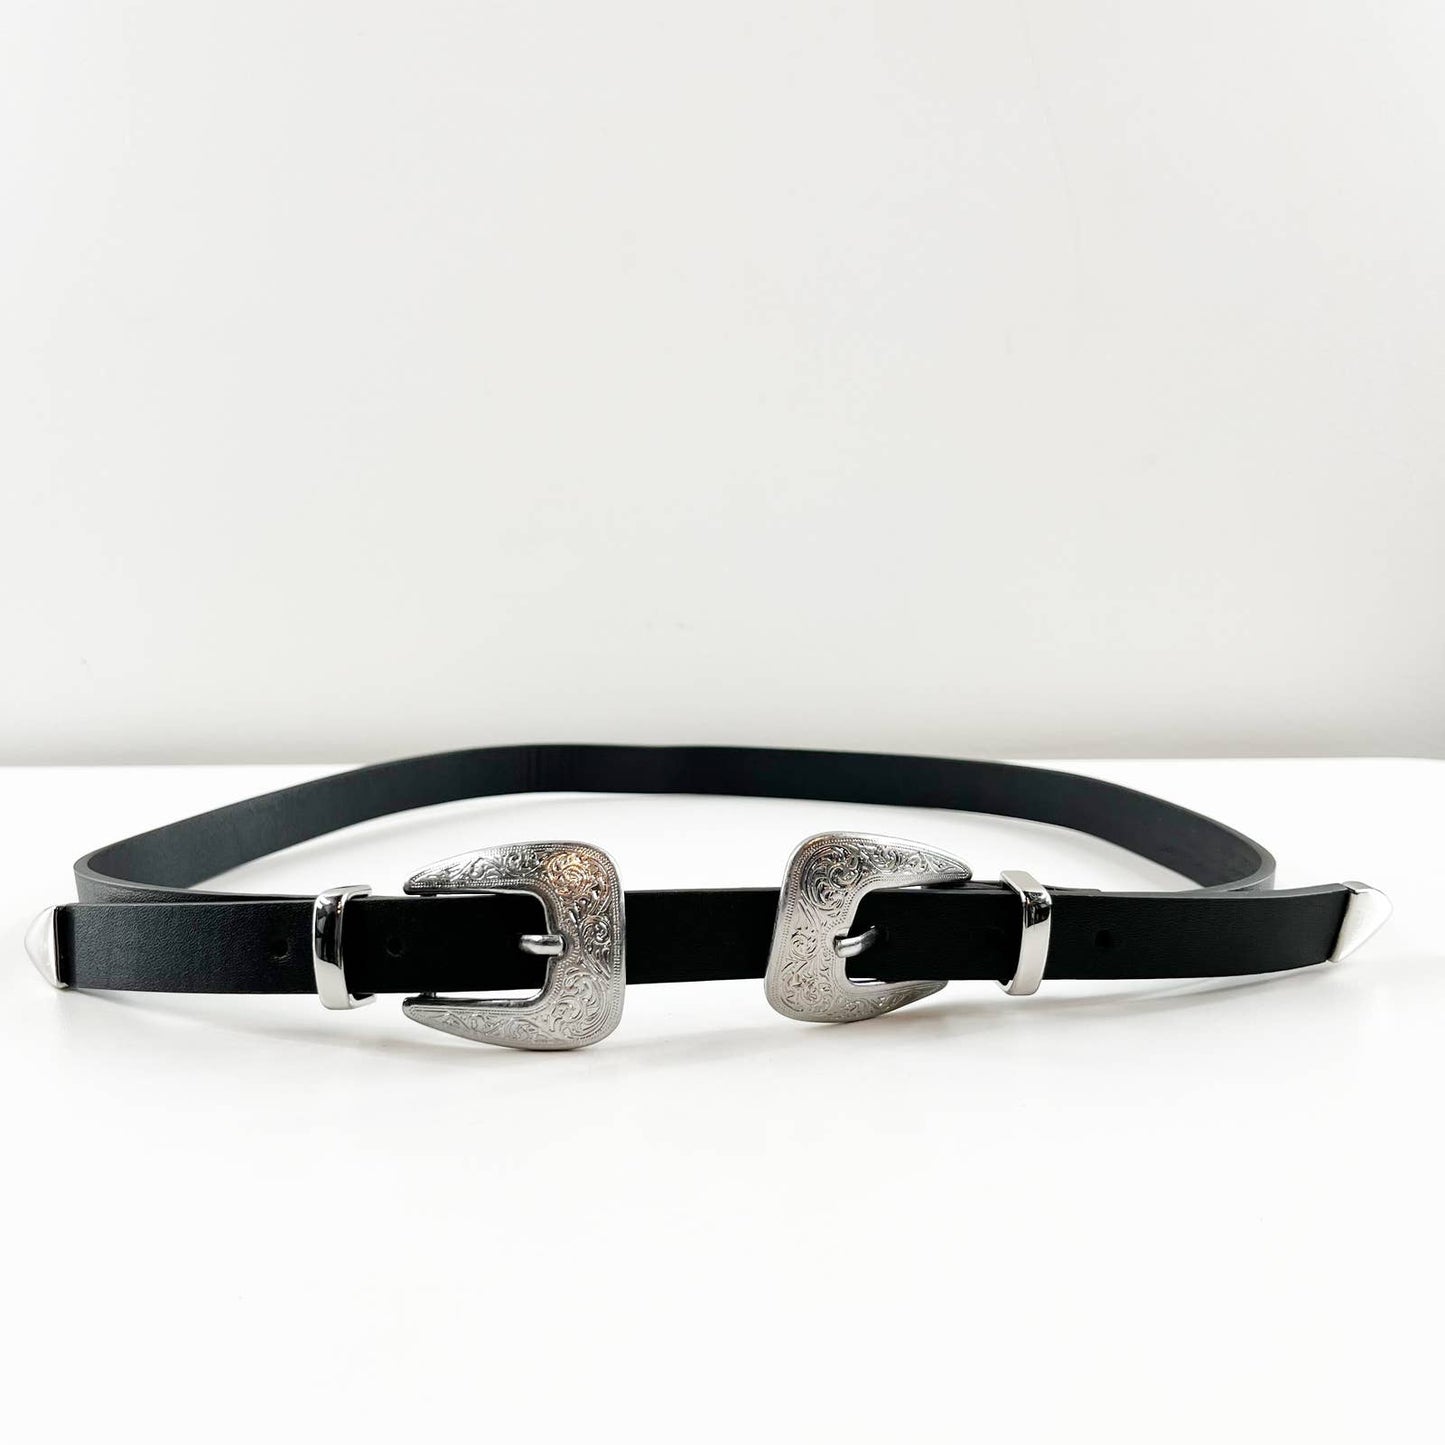 Western Gaucho Faux Leather Double Buckle Waist Belt Black/Silver One size